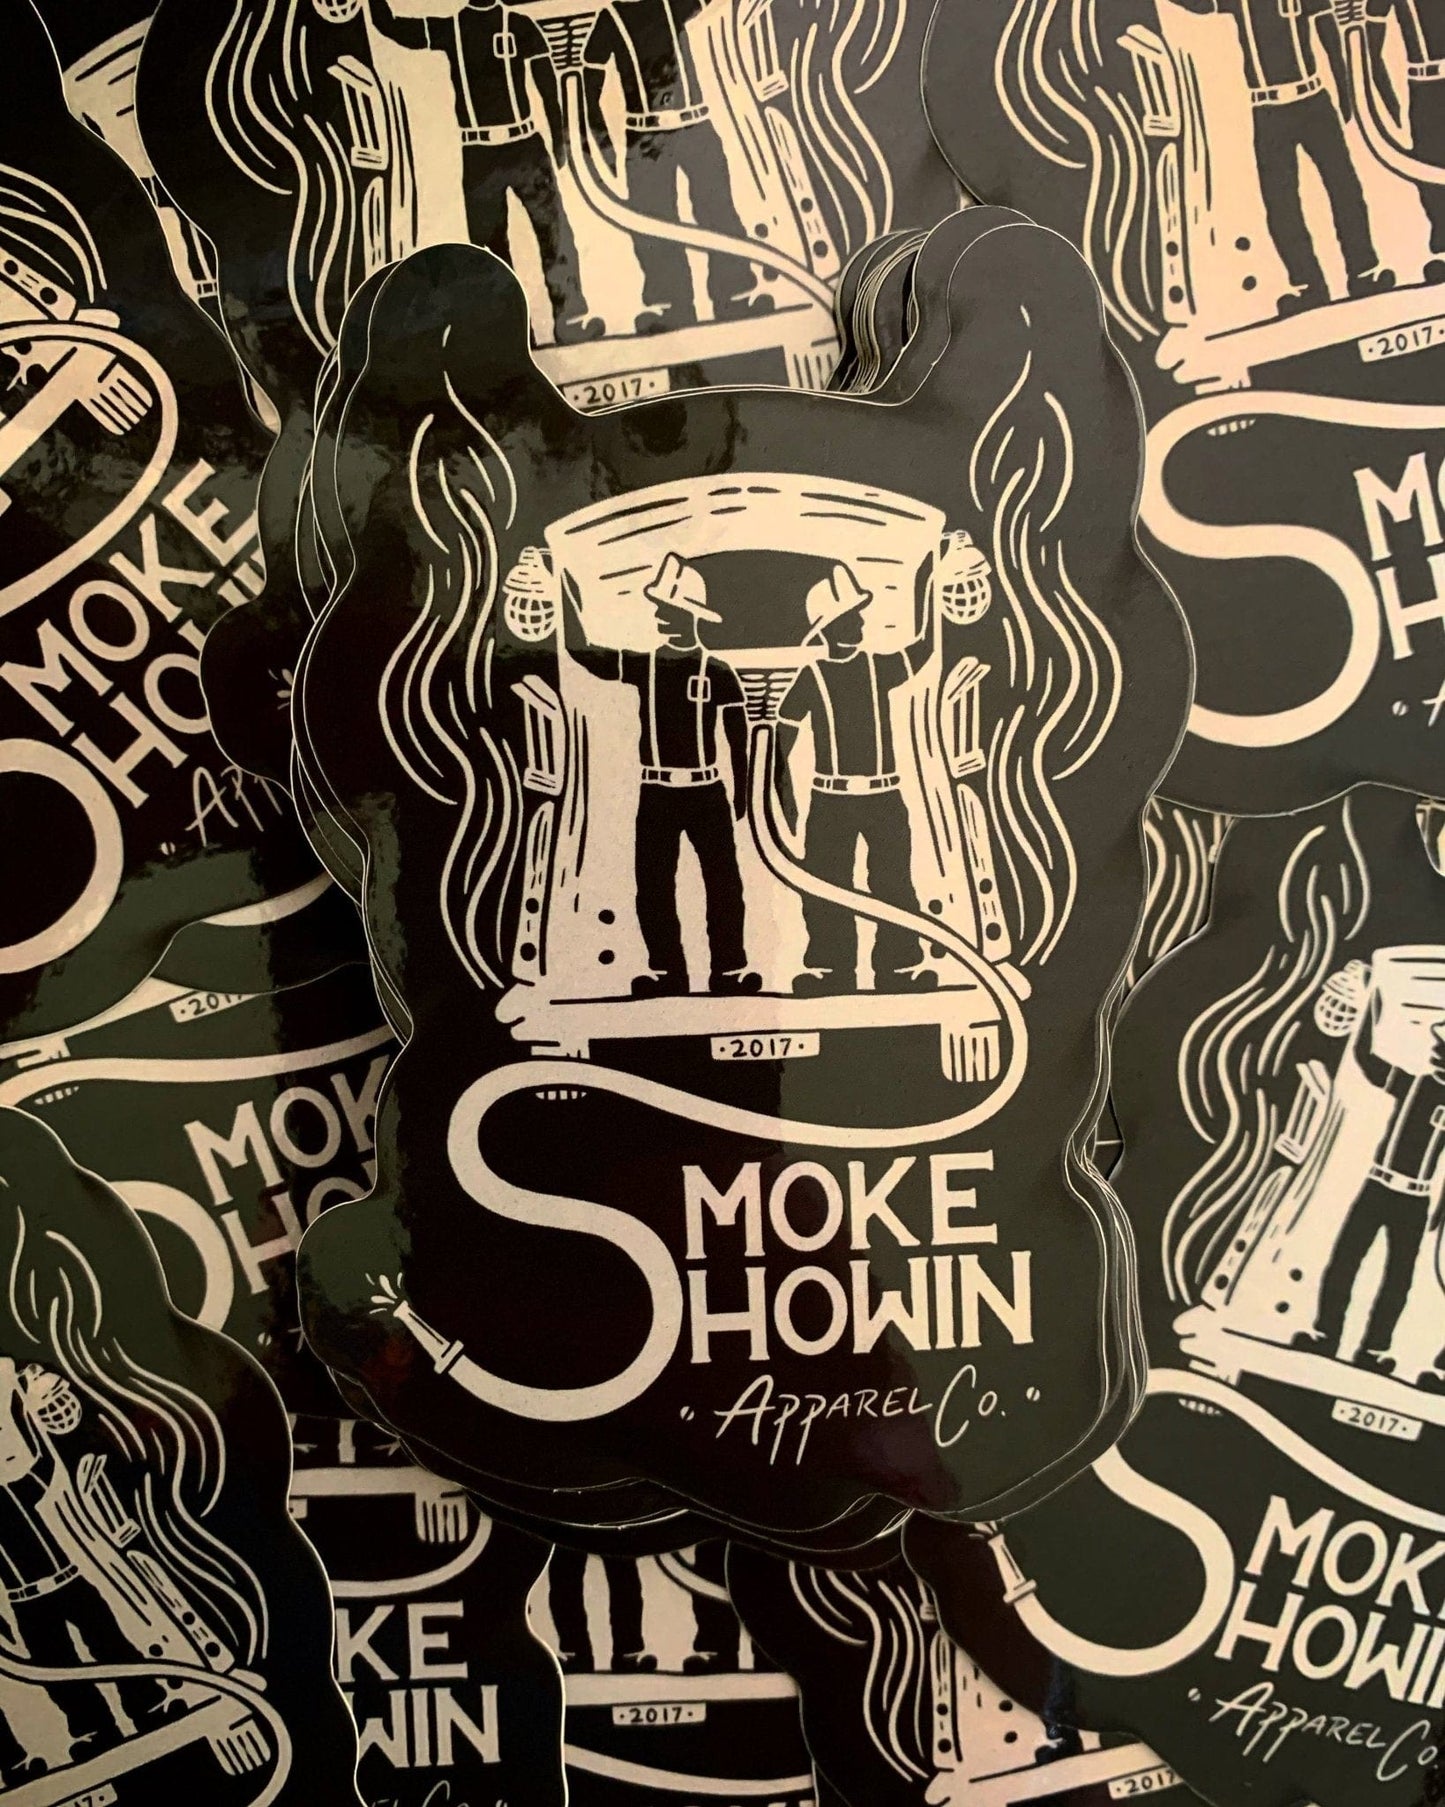 Chief Miller Smoke Showin Sticker Apparel